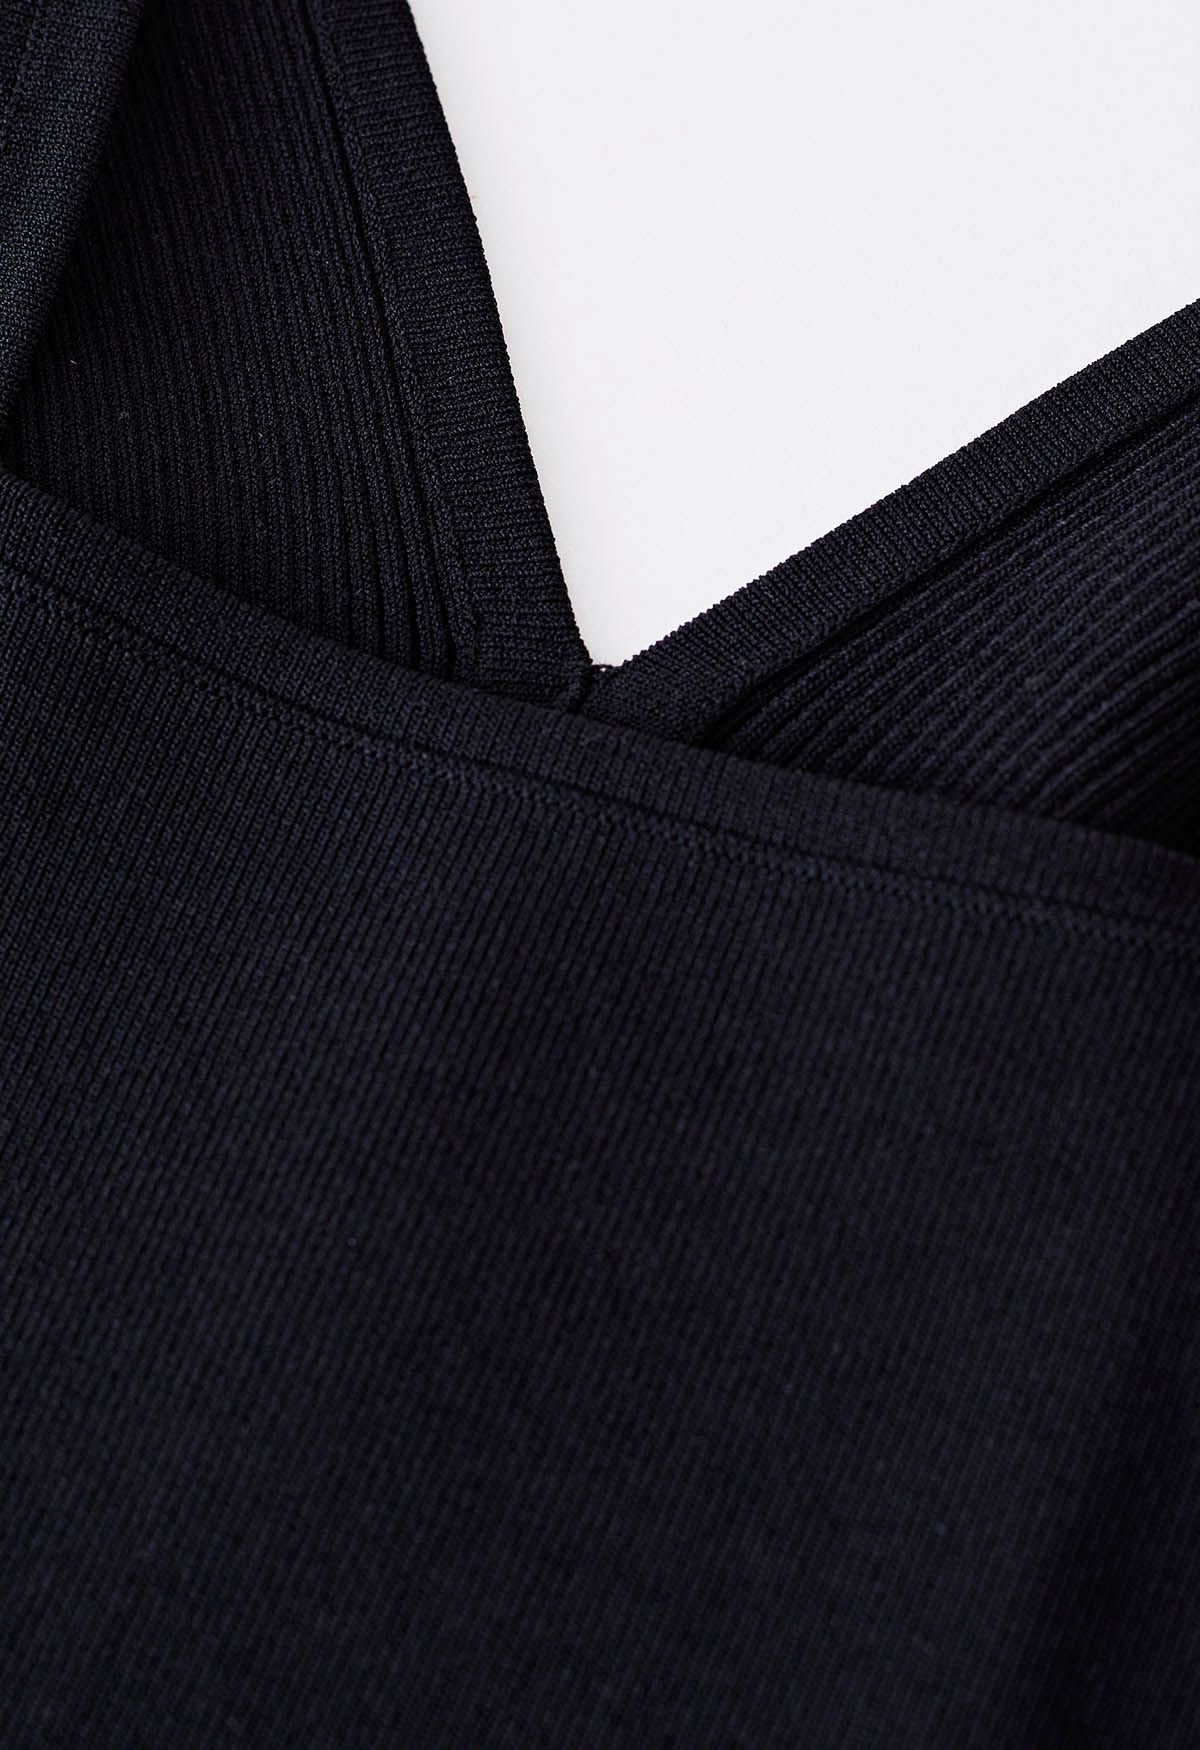 V-Neck Rib Cami Crop Top in Black - Retro, Indie and Unique Fashion